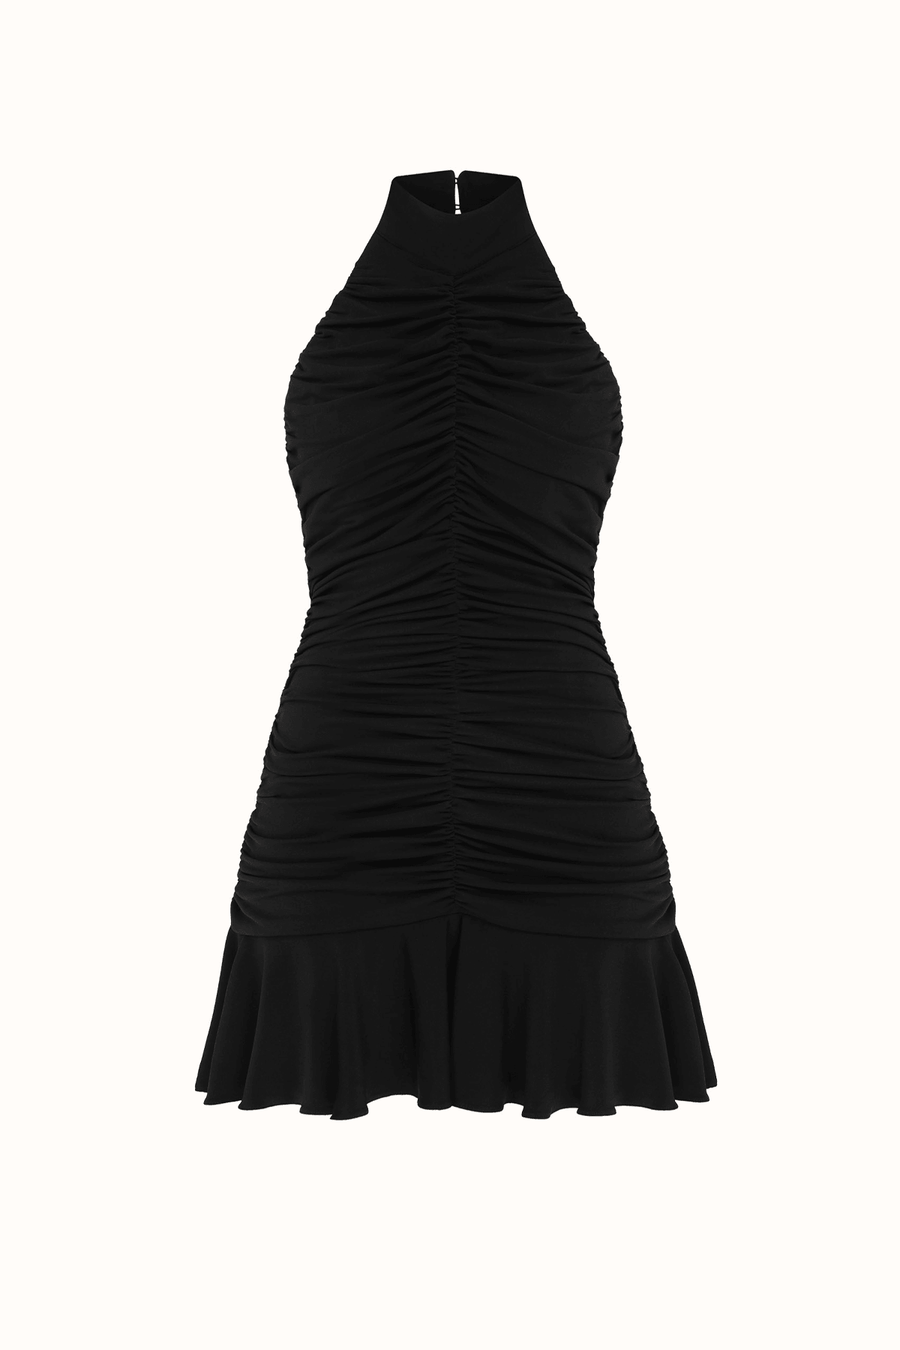 Juliet Mini Elbise / Siyah - NAIA ISTANBUL Shop Online